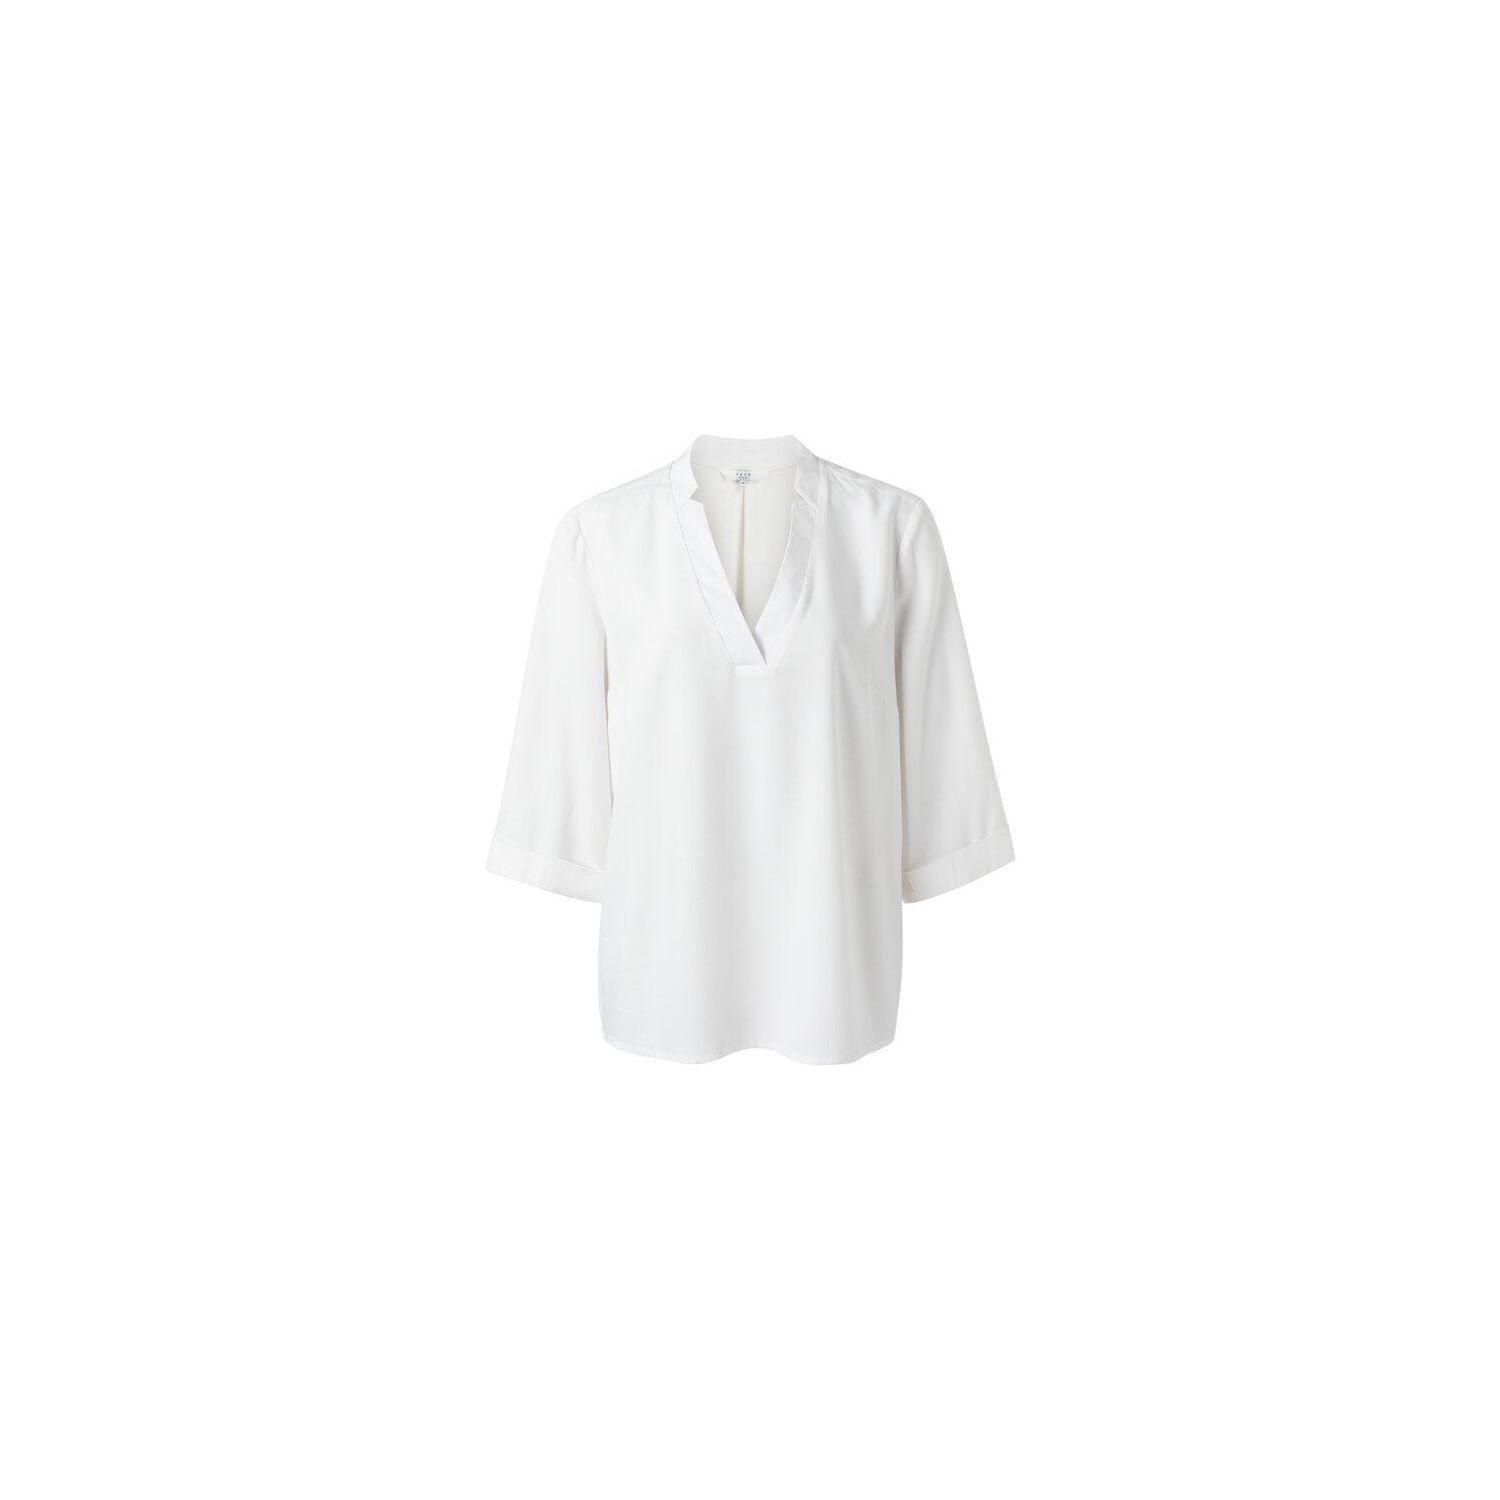 Yaya v-neck blouse 3/4 sleeves blanc de blanc